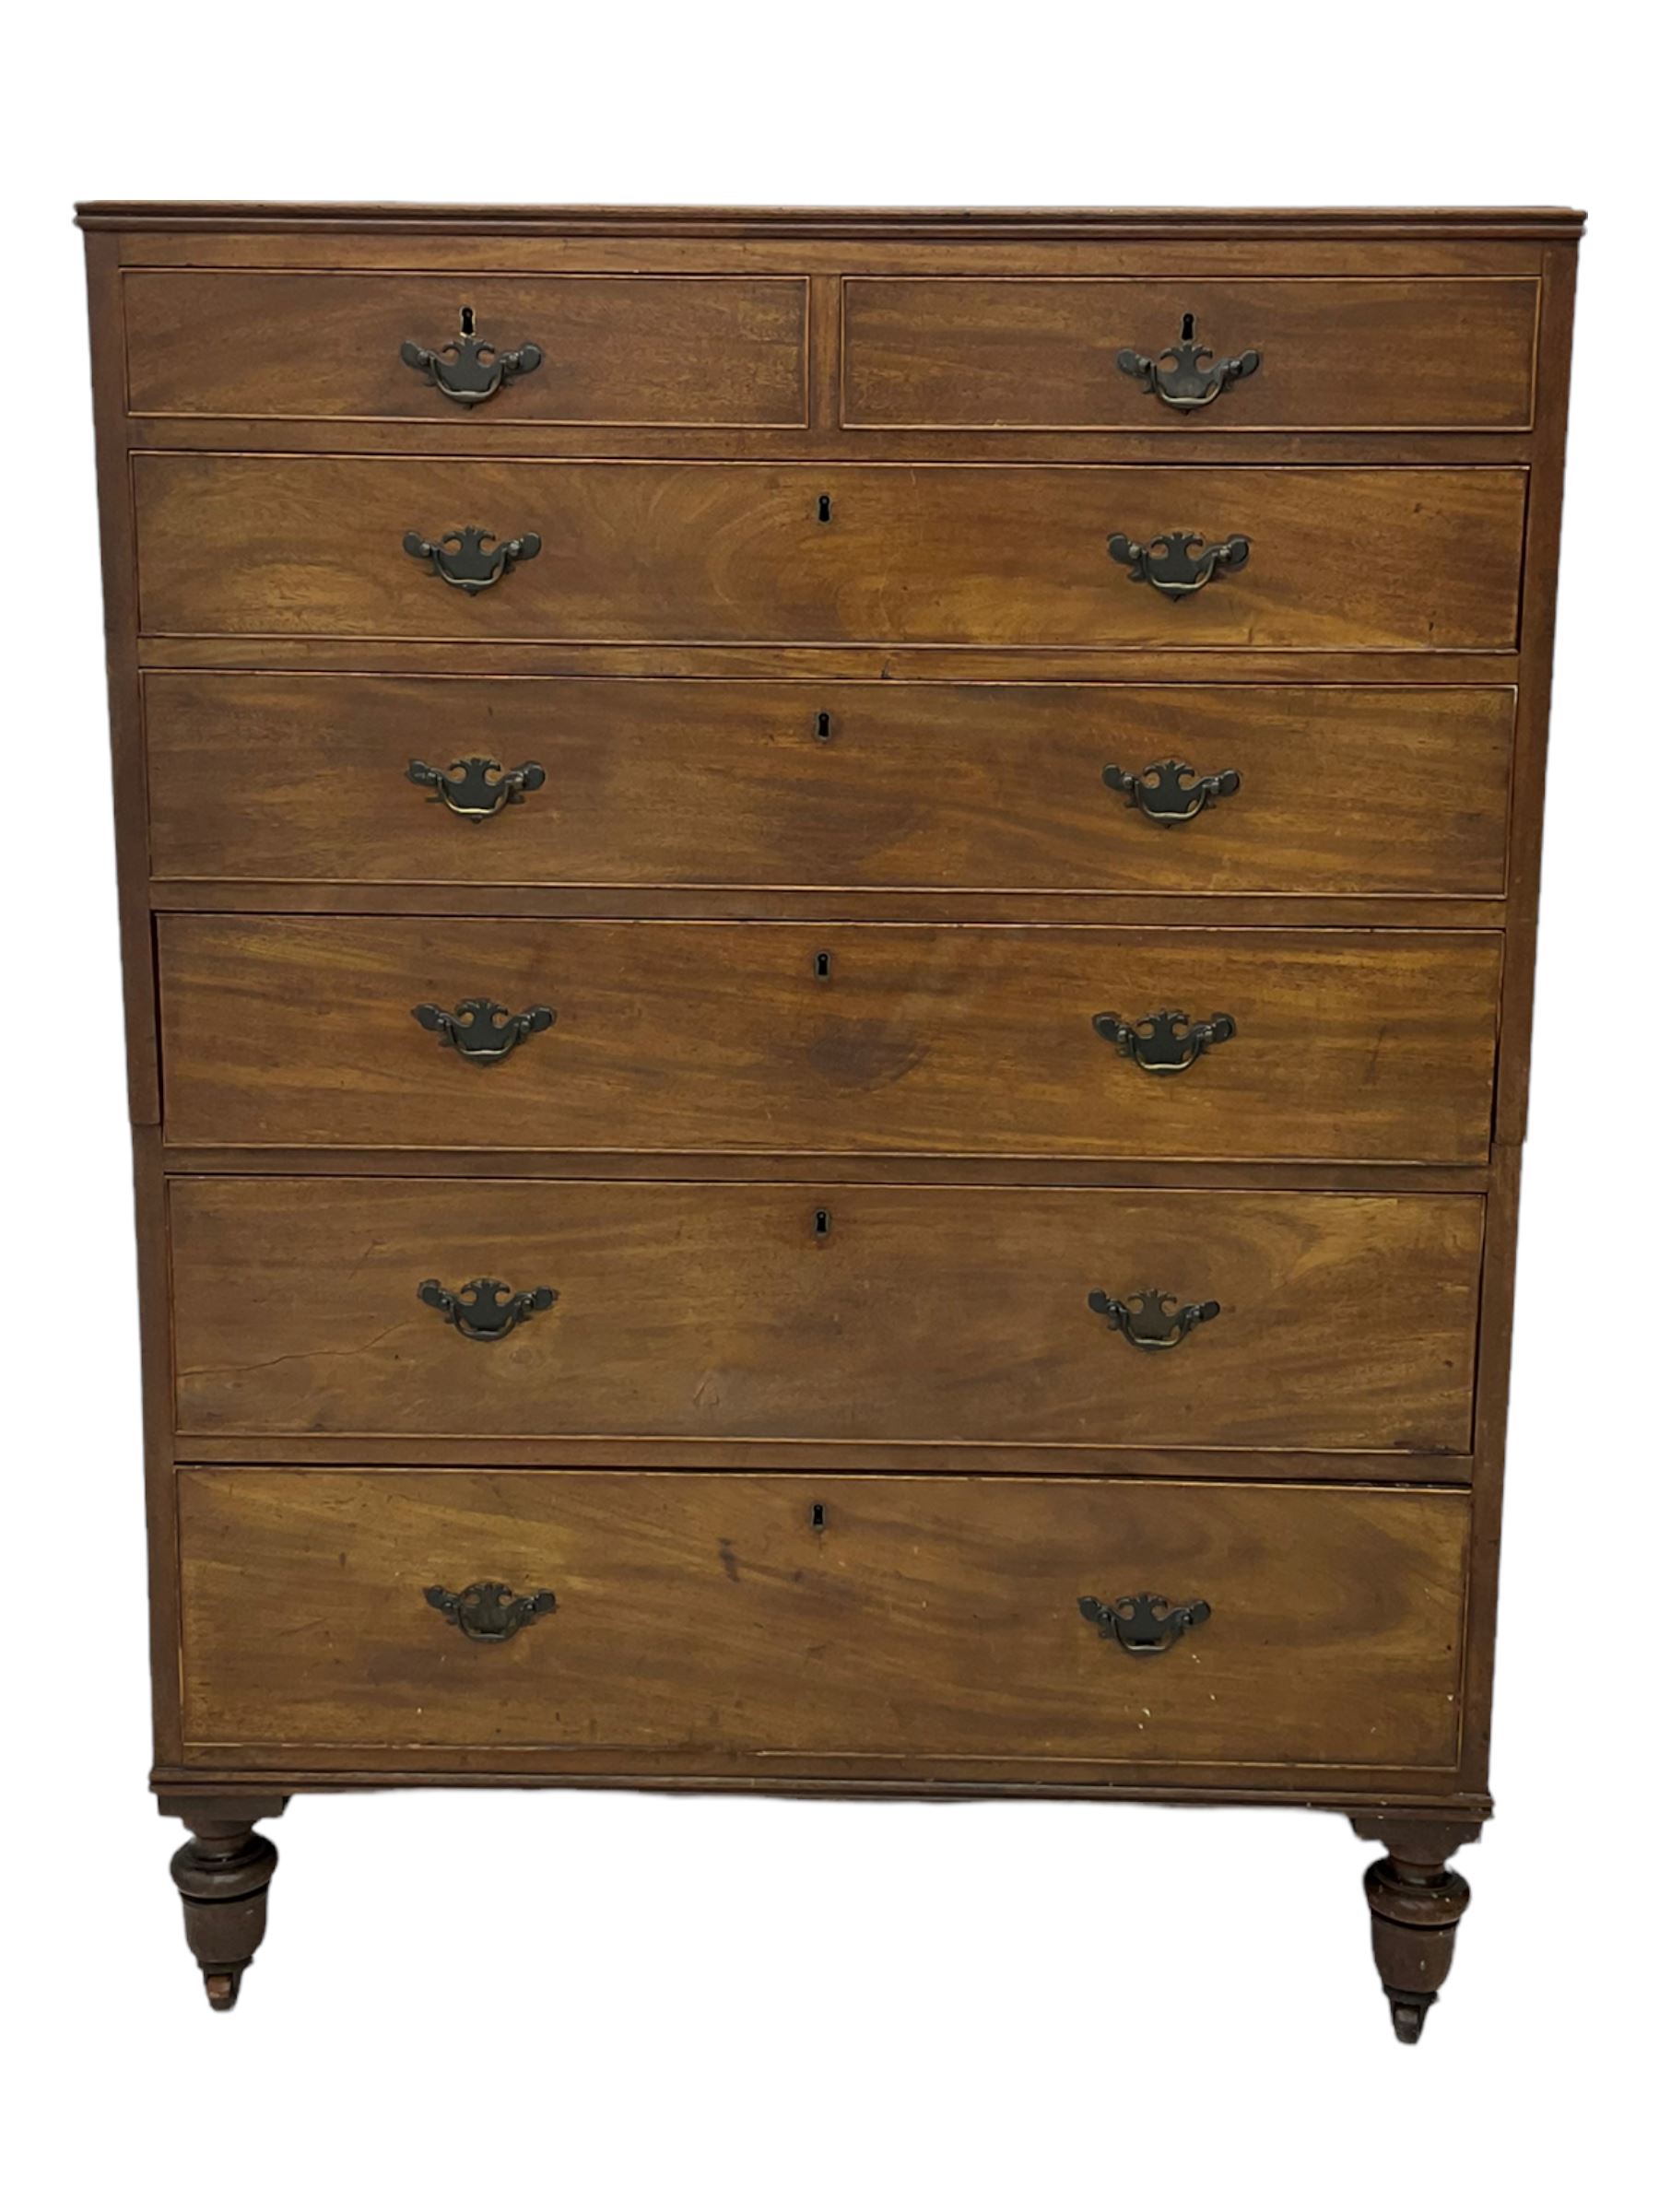 19th century mahogany straight front chest